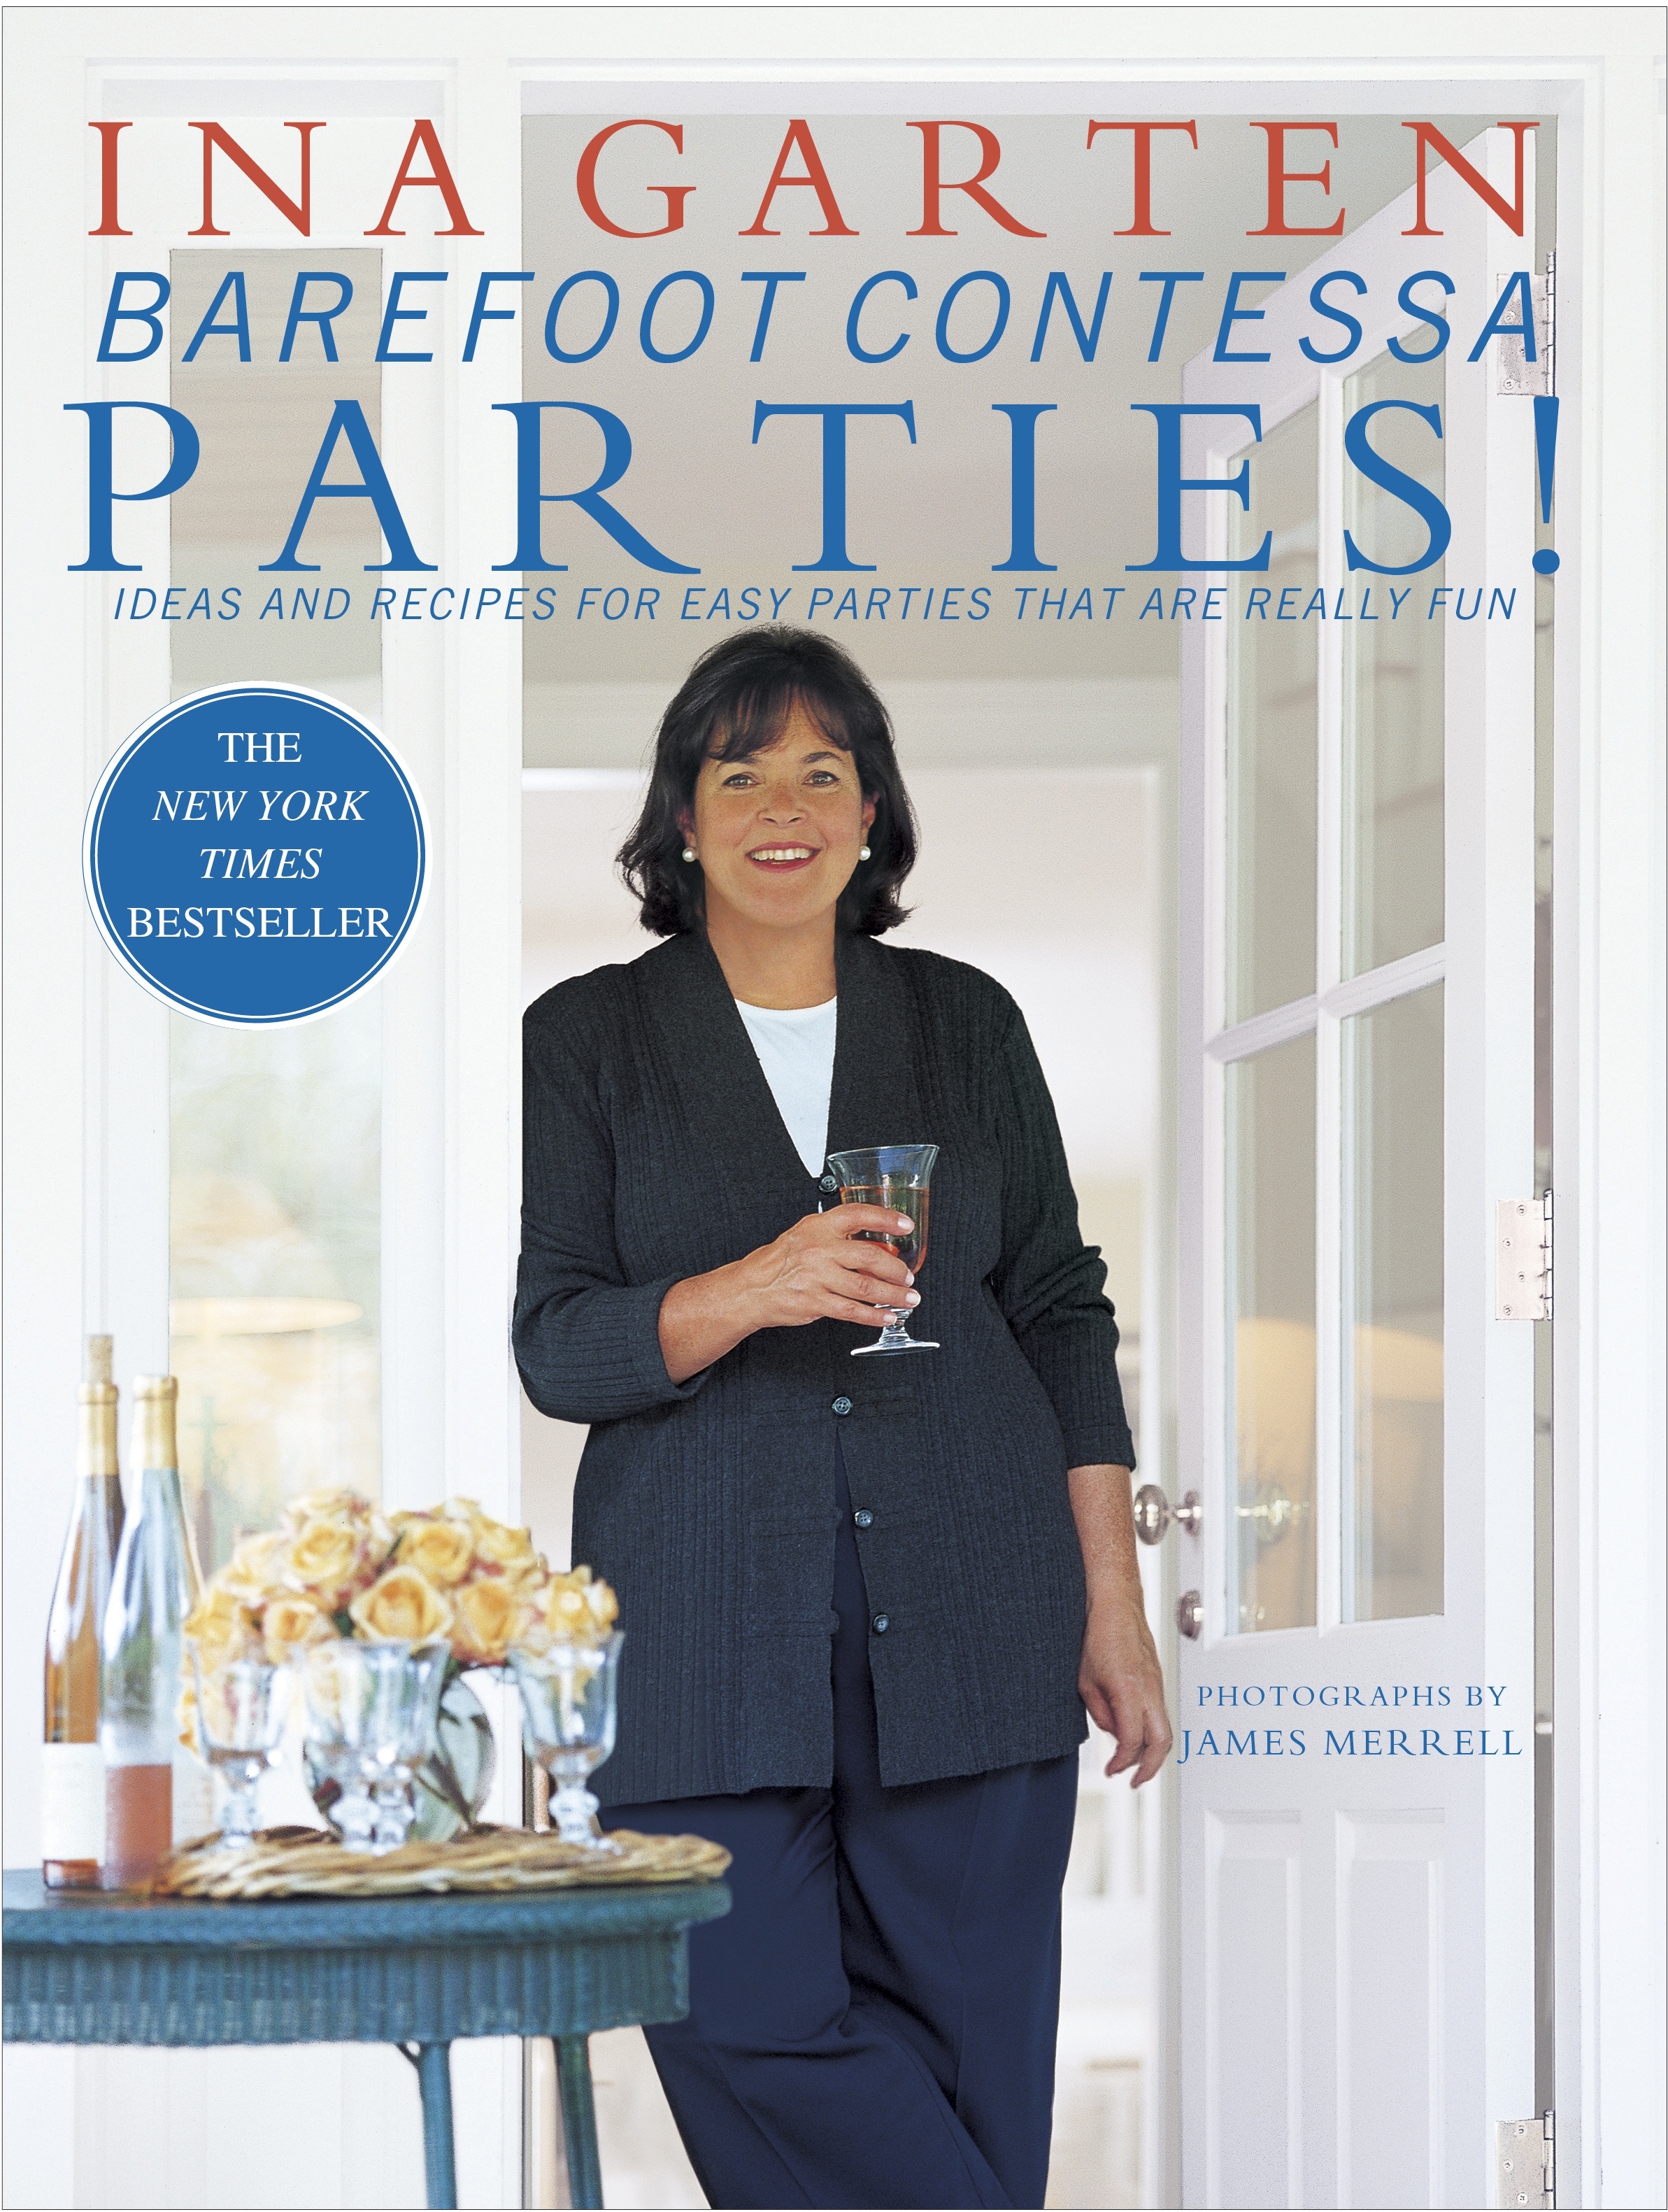 Barefoot Contessa Parties! by Ina Garten - Penguin Books Australia